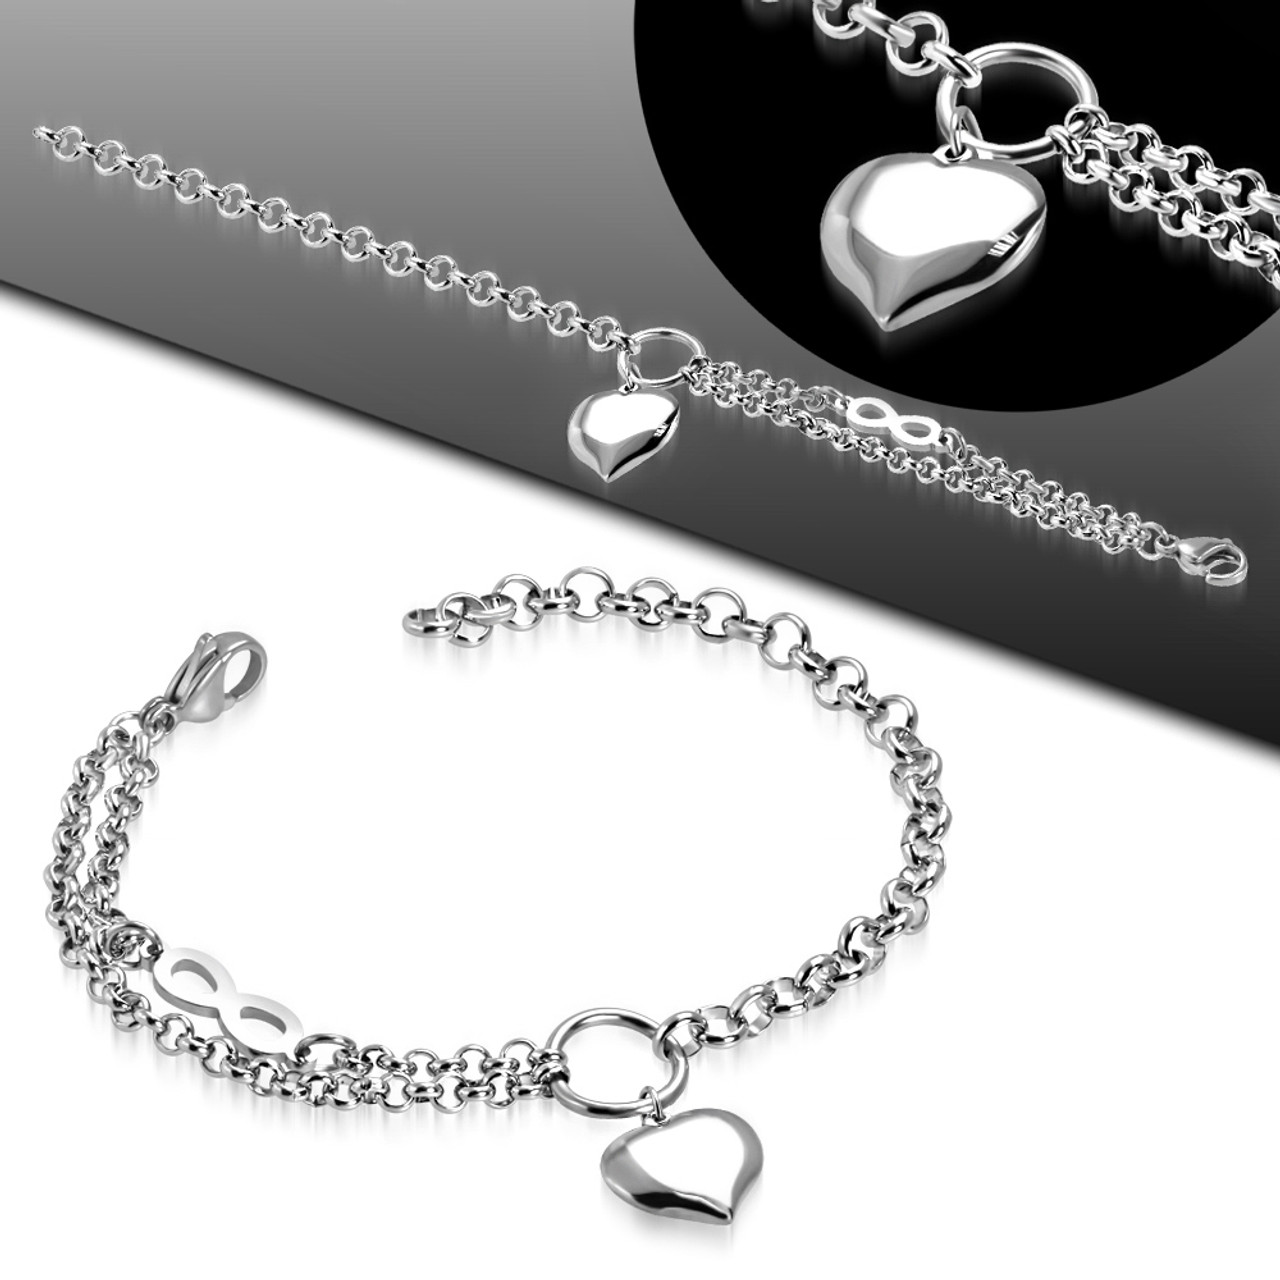 Buy Personalized Infinity Heart Charm Chain Bracelet Gift Item